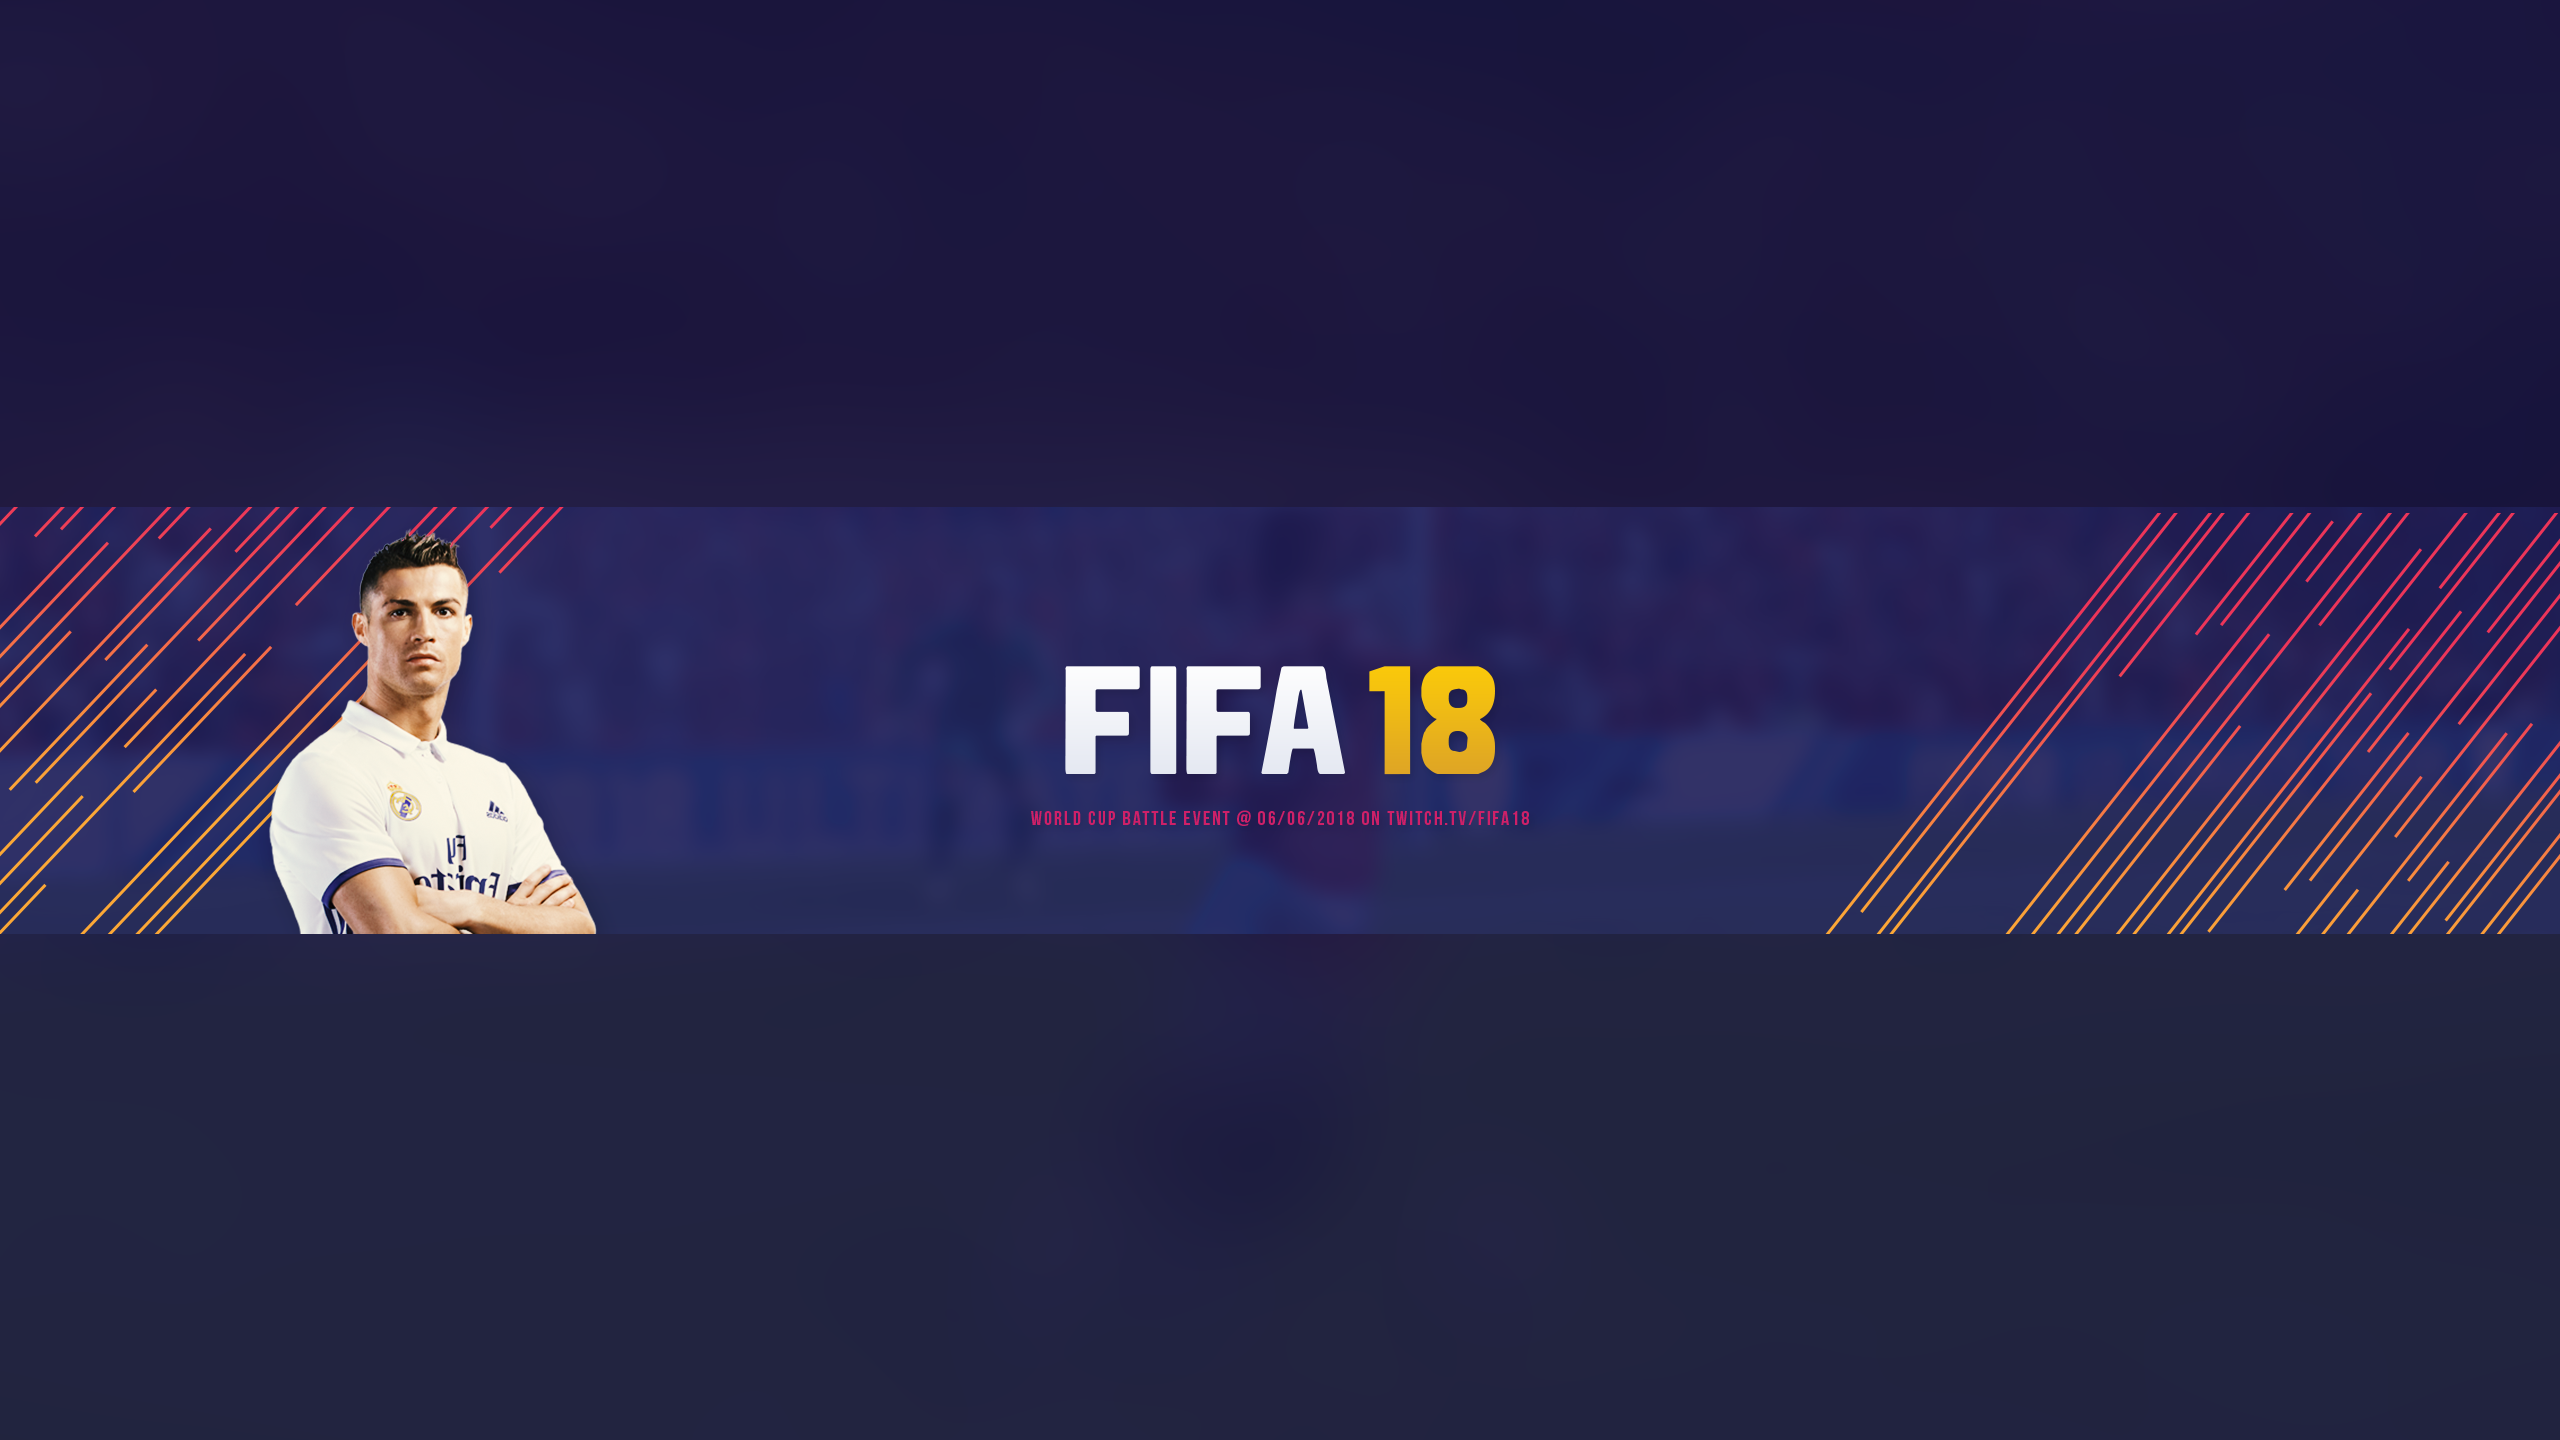 FIFA 18 Banner